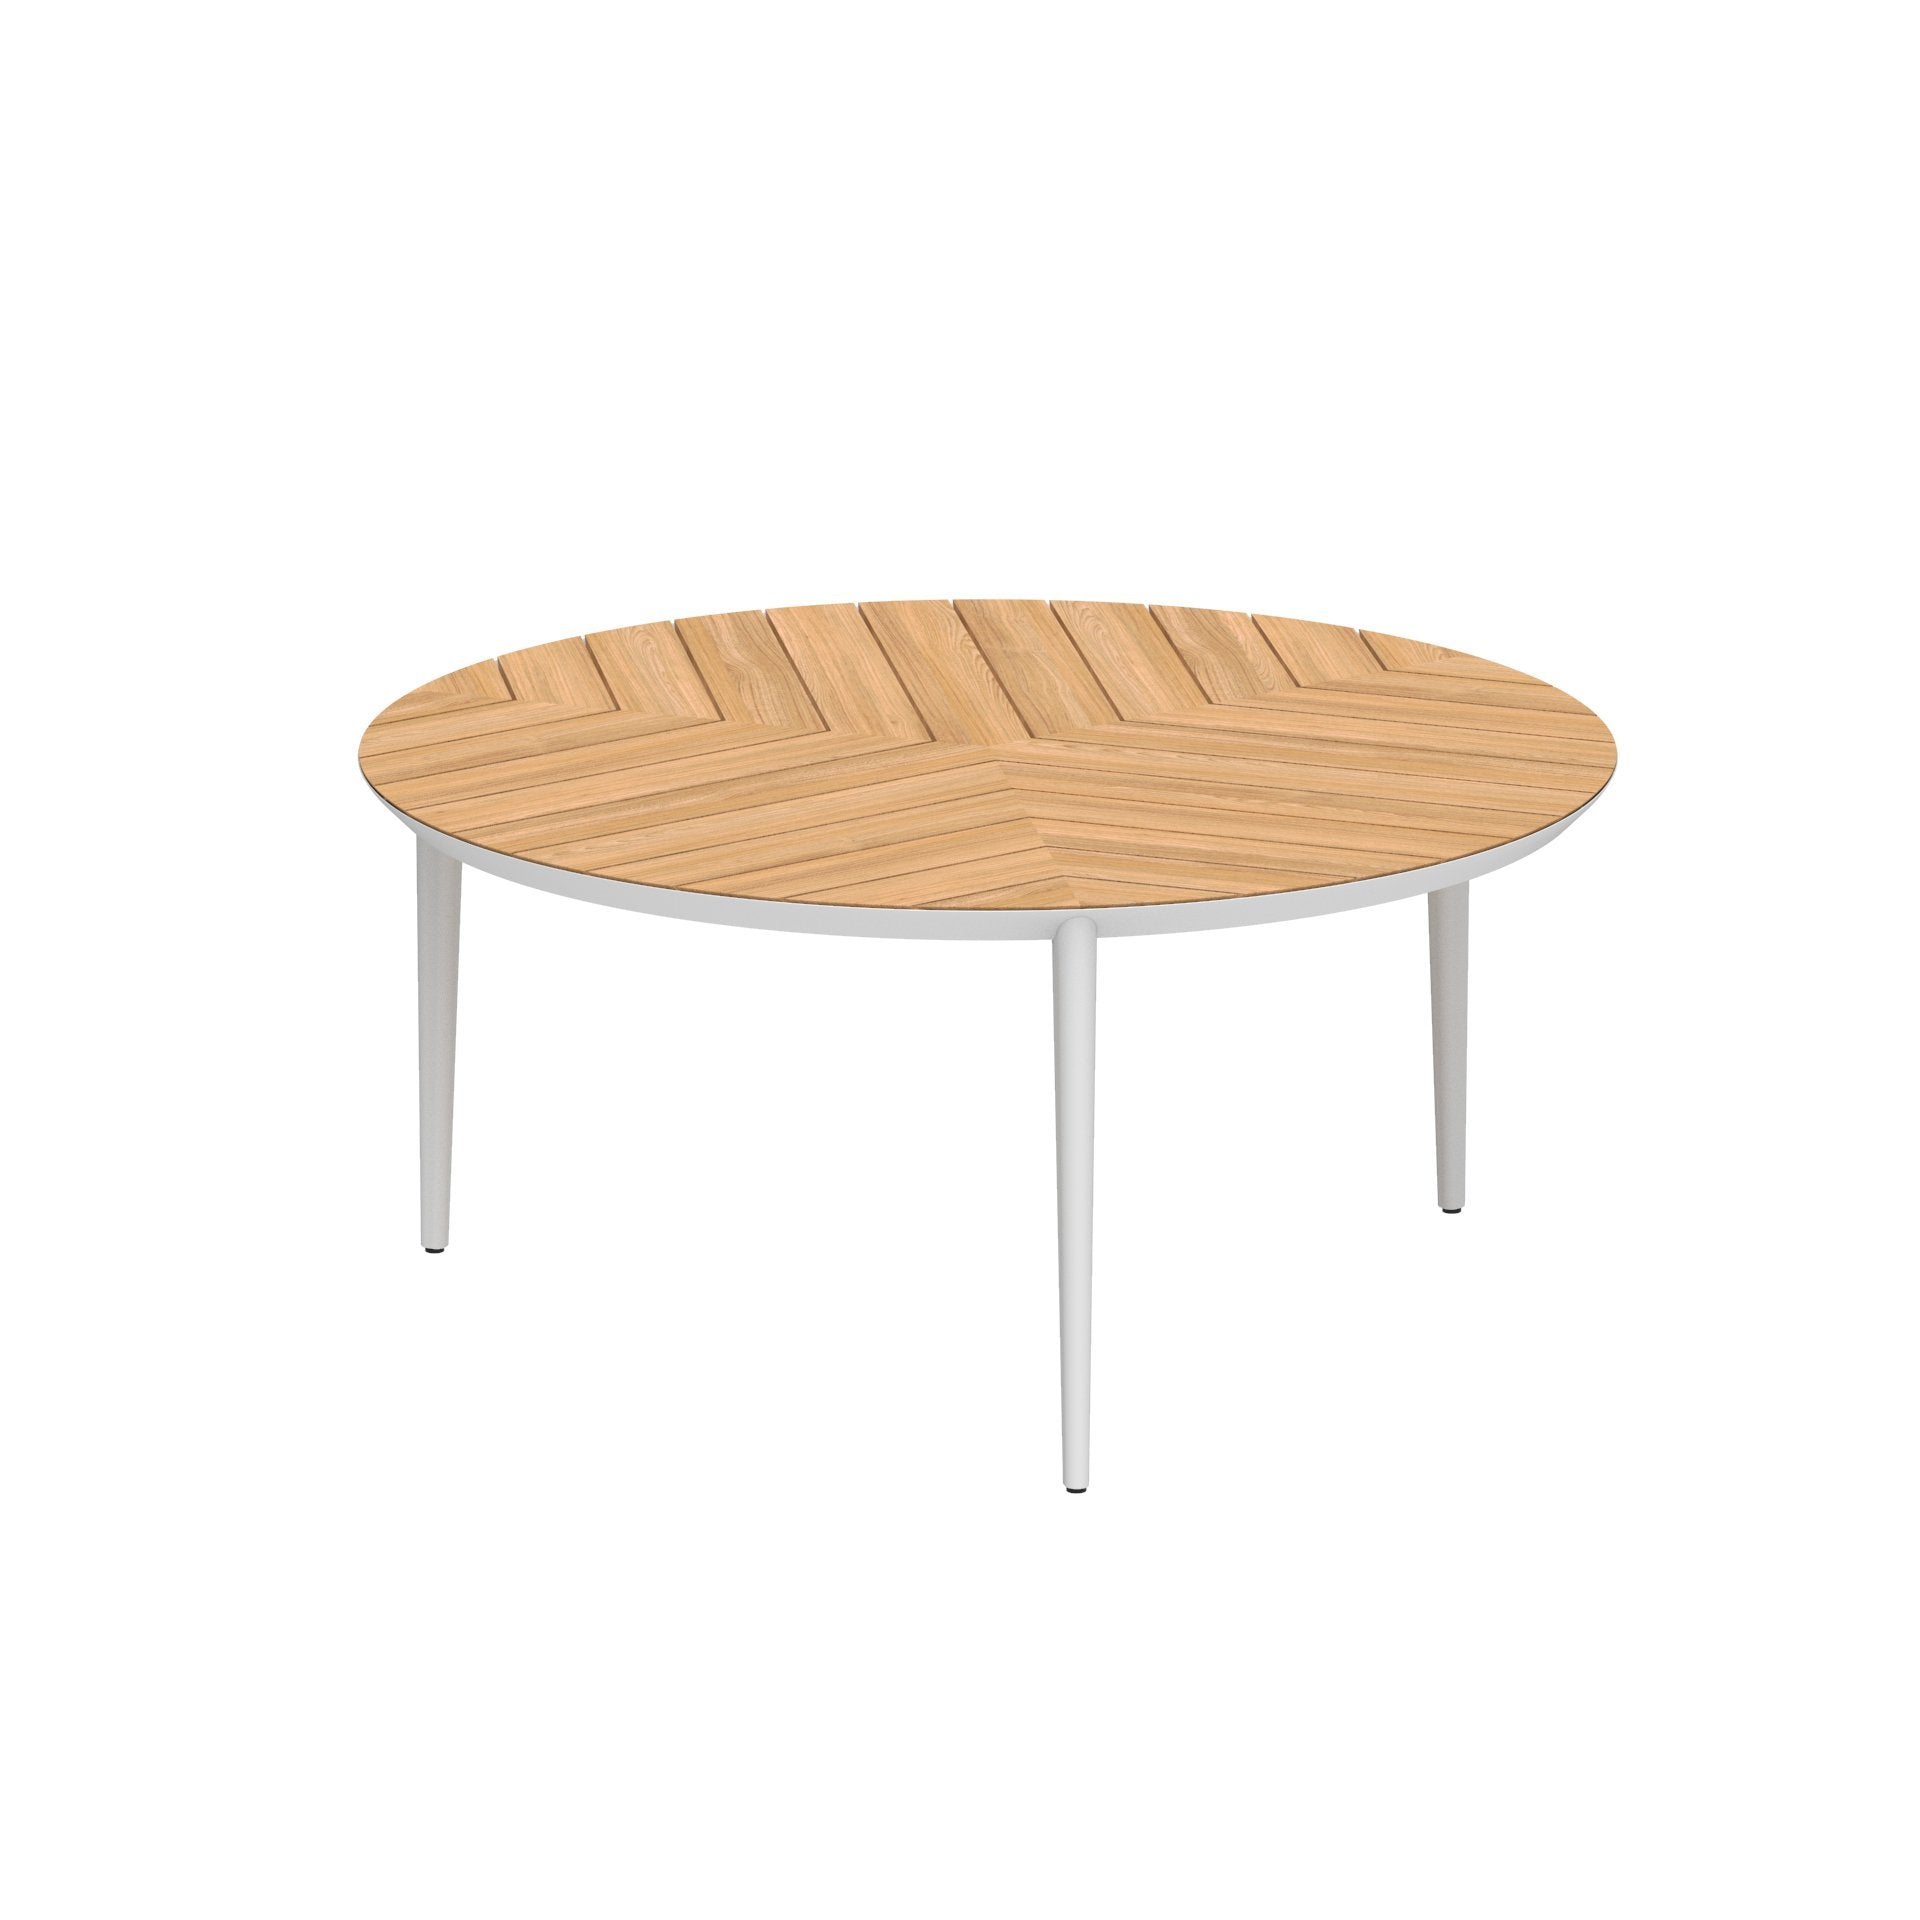 U-nite 160cm round dining table in Teak 